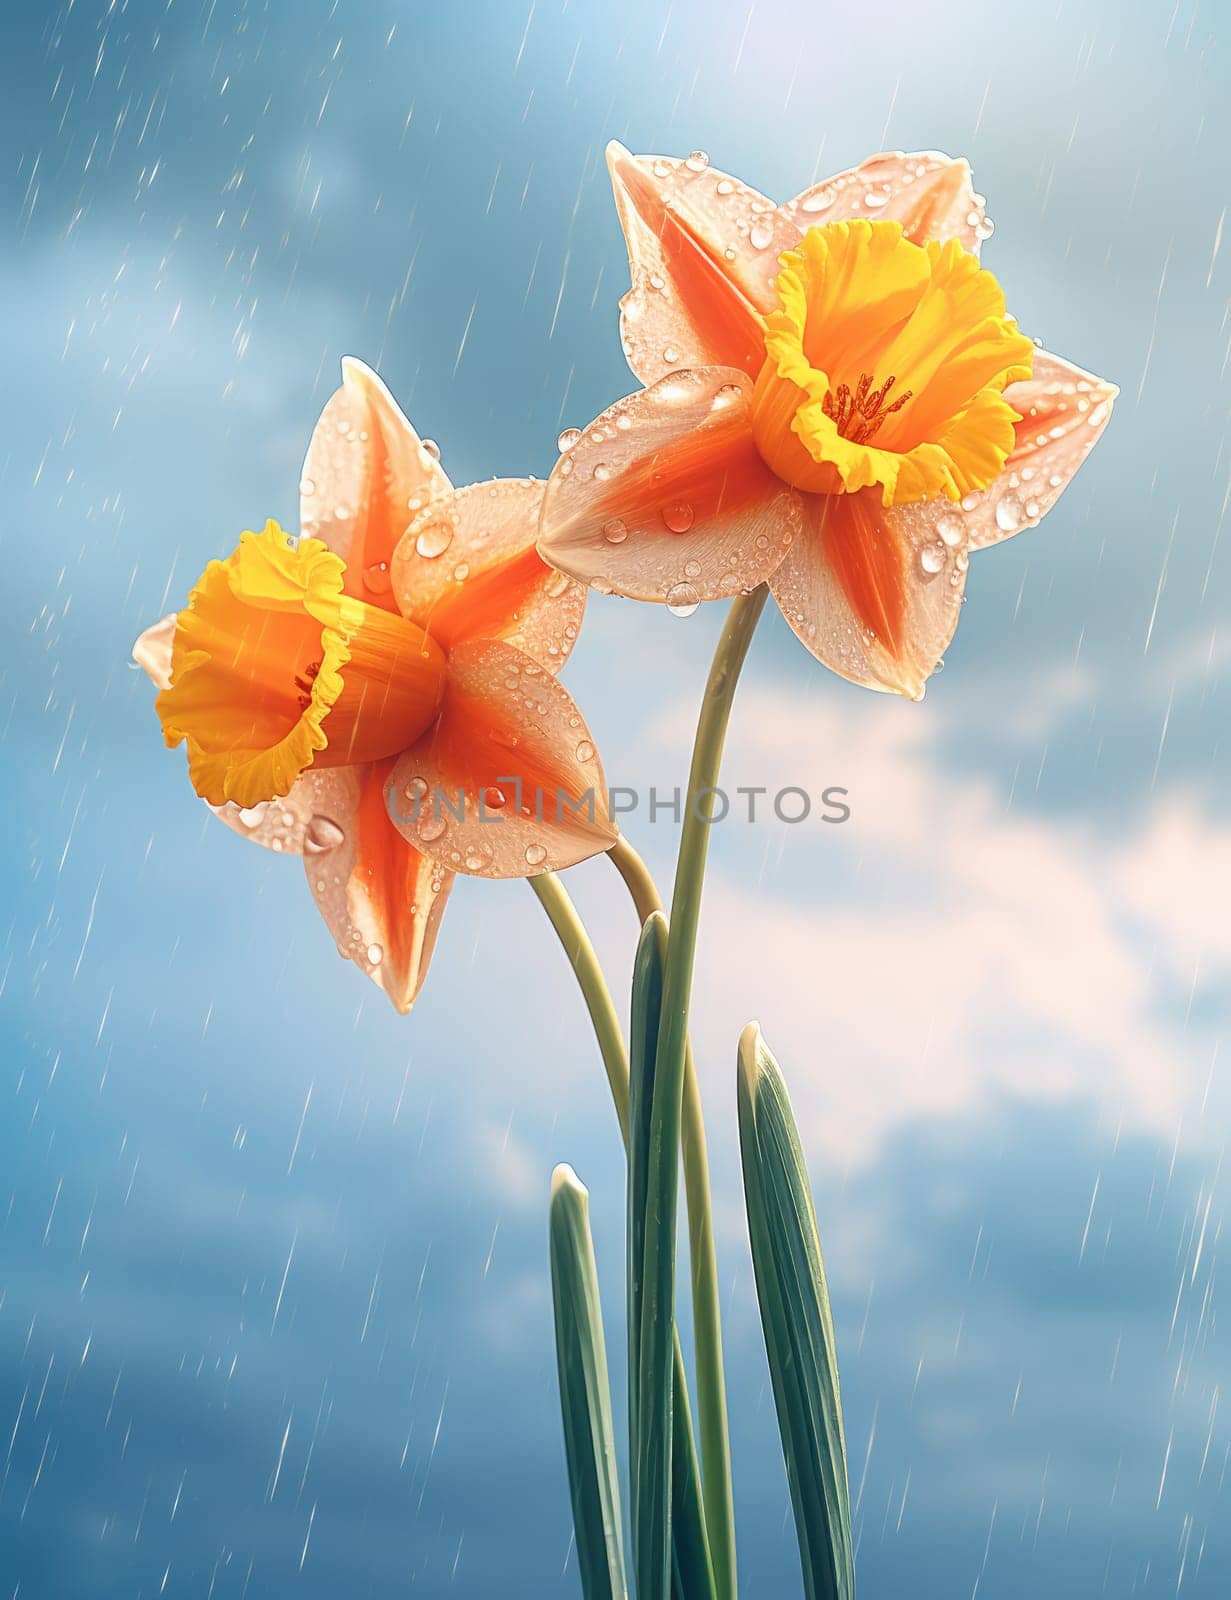 Daffodils in the rain drops by palinchak